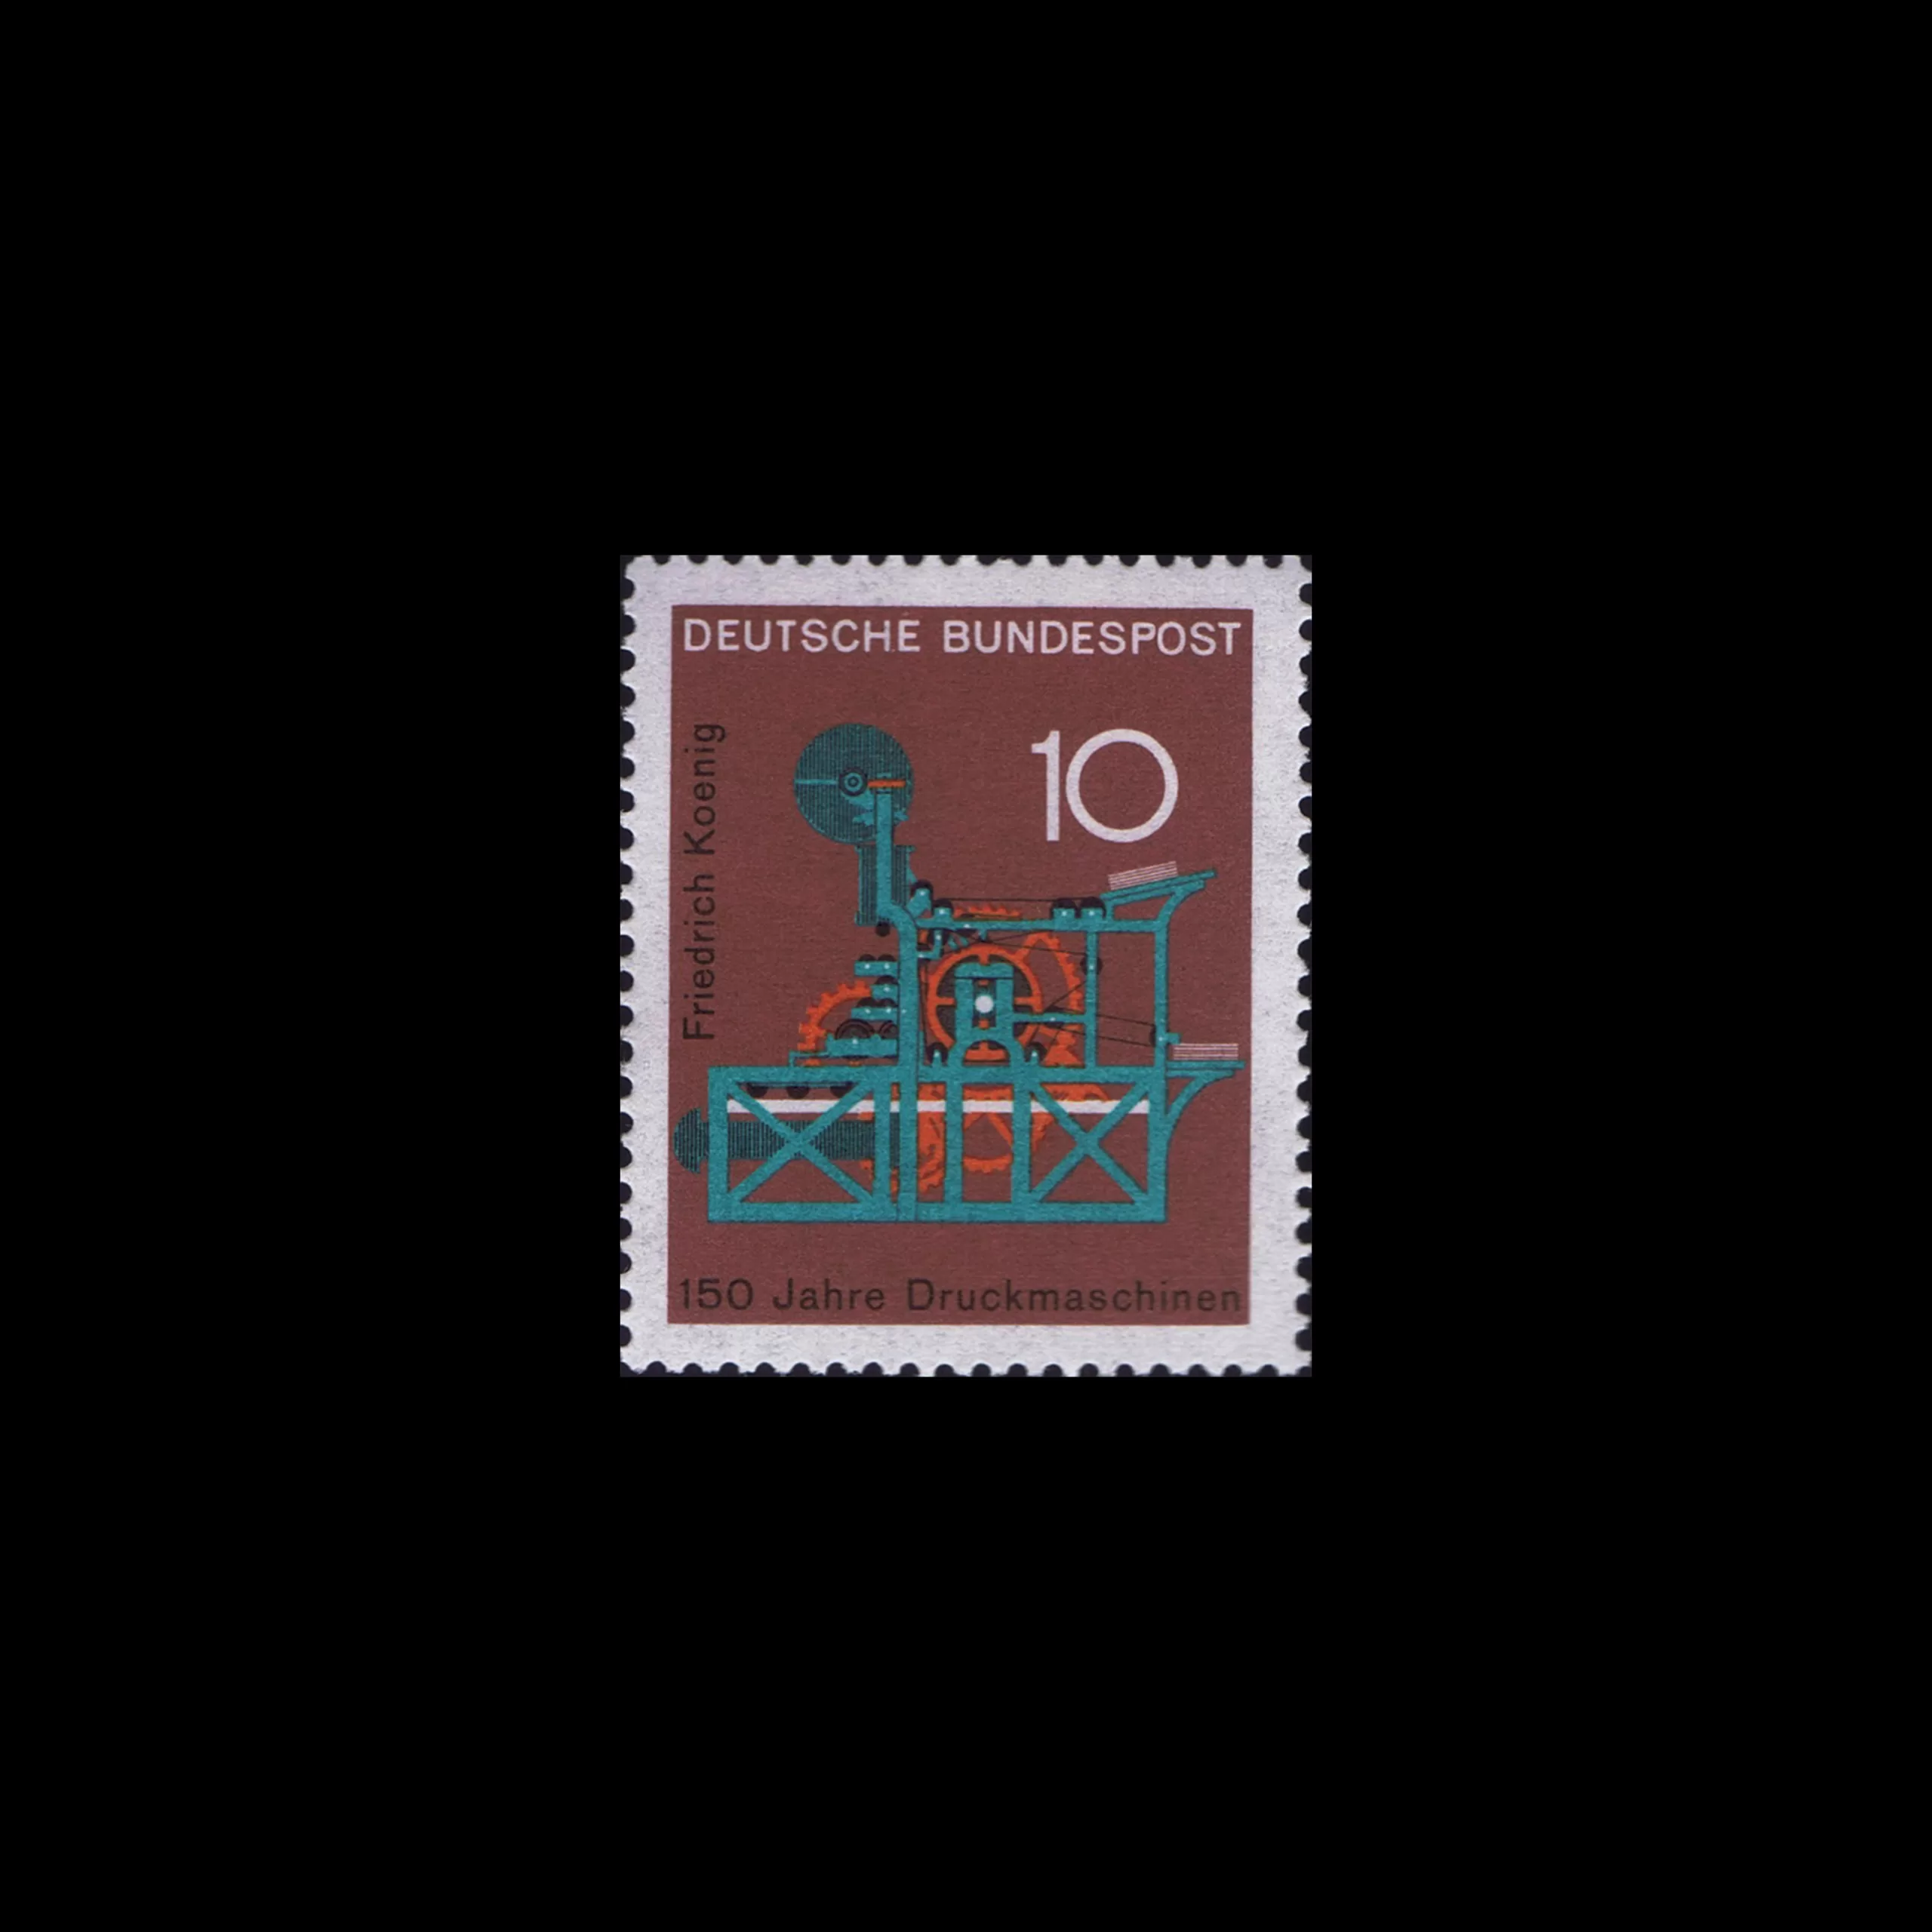 Koenig Printing Press, German Stamp, 1968. Designed by Karl Oskar Blase